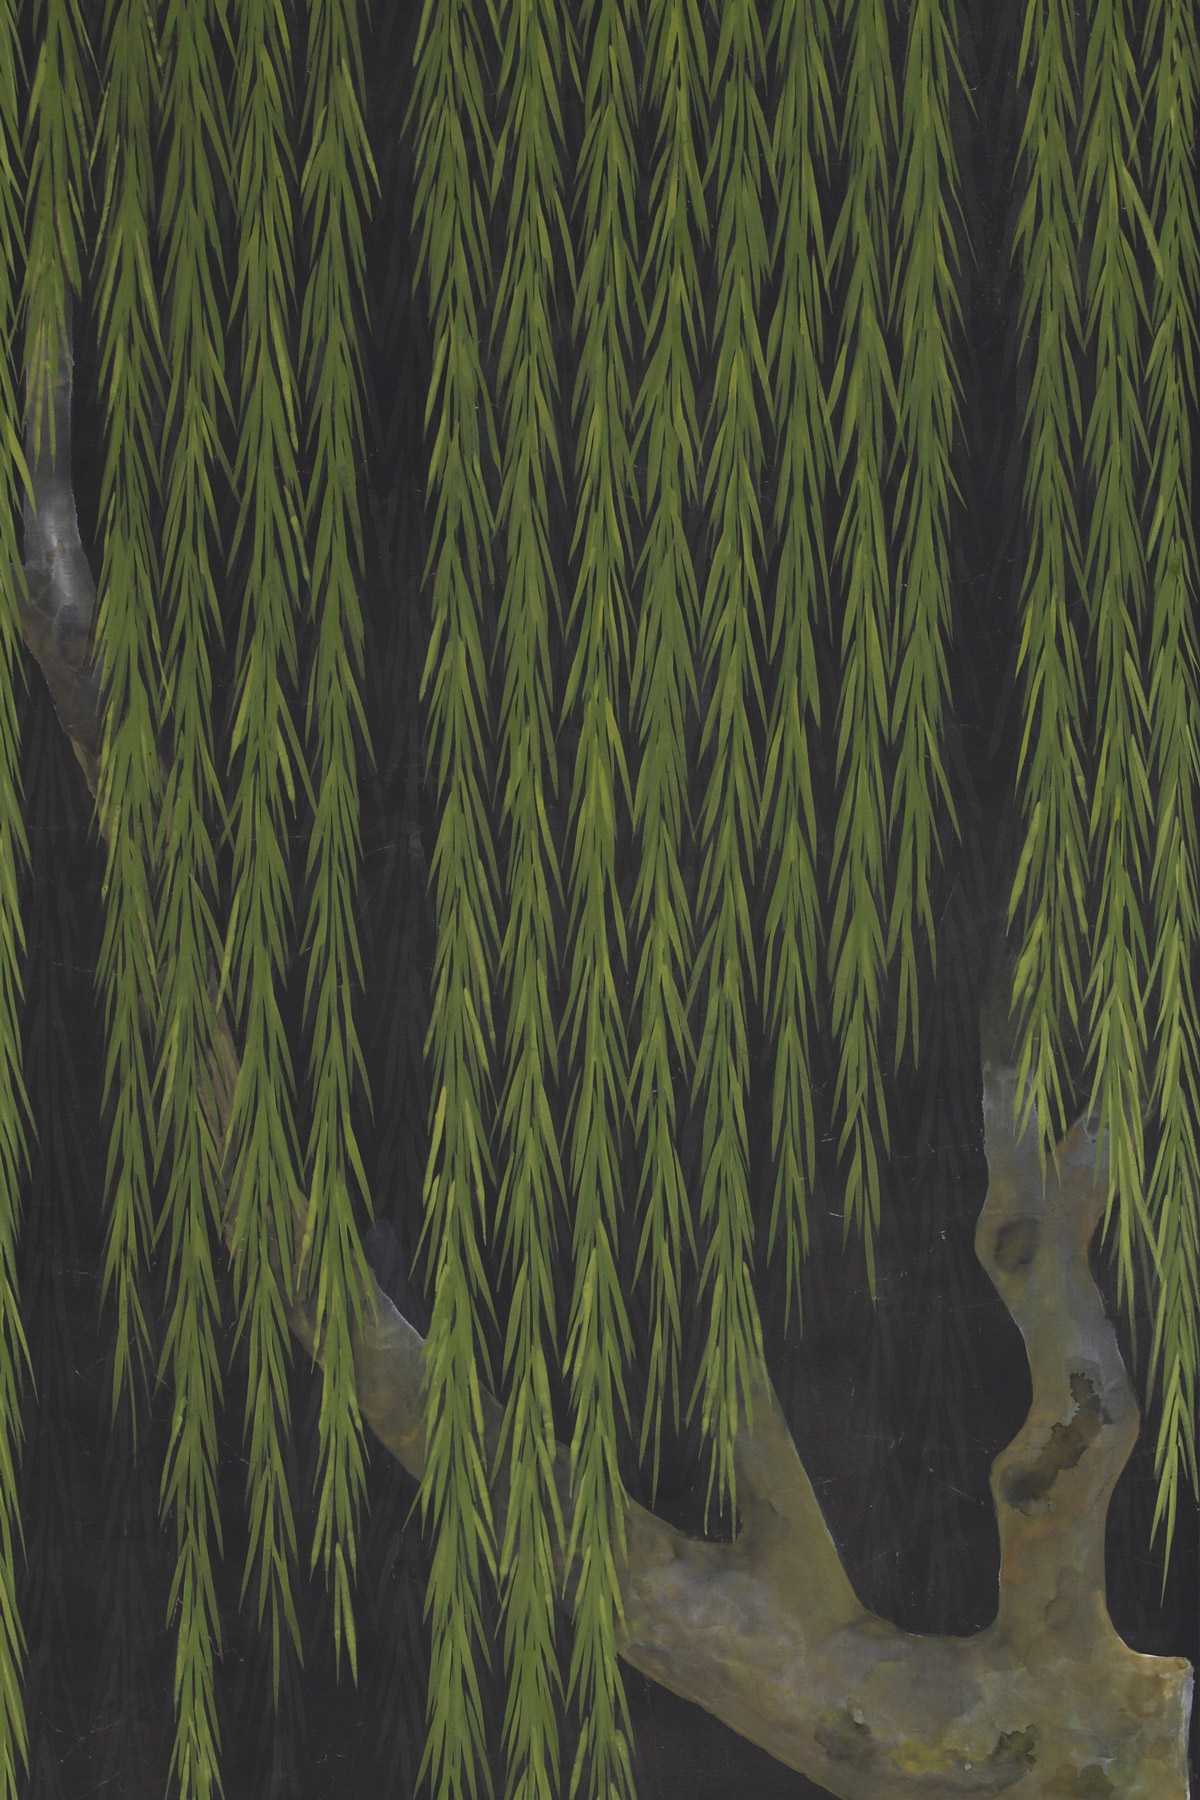 'Willow' in Original design colours on Edo Night painted silk